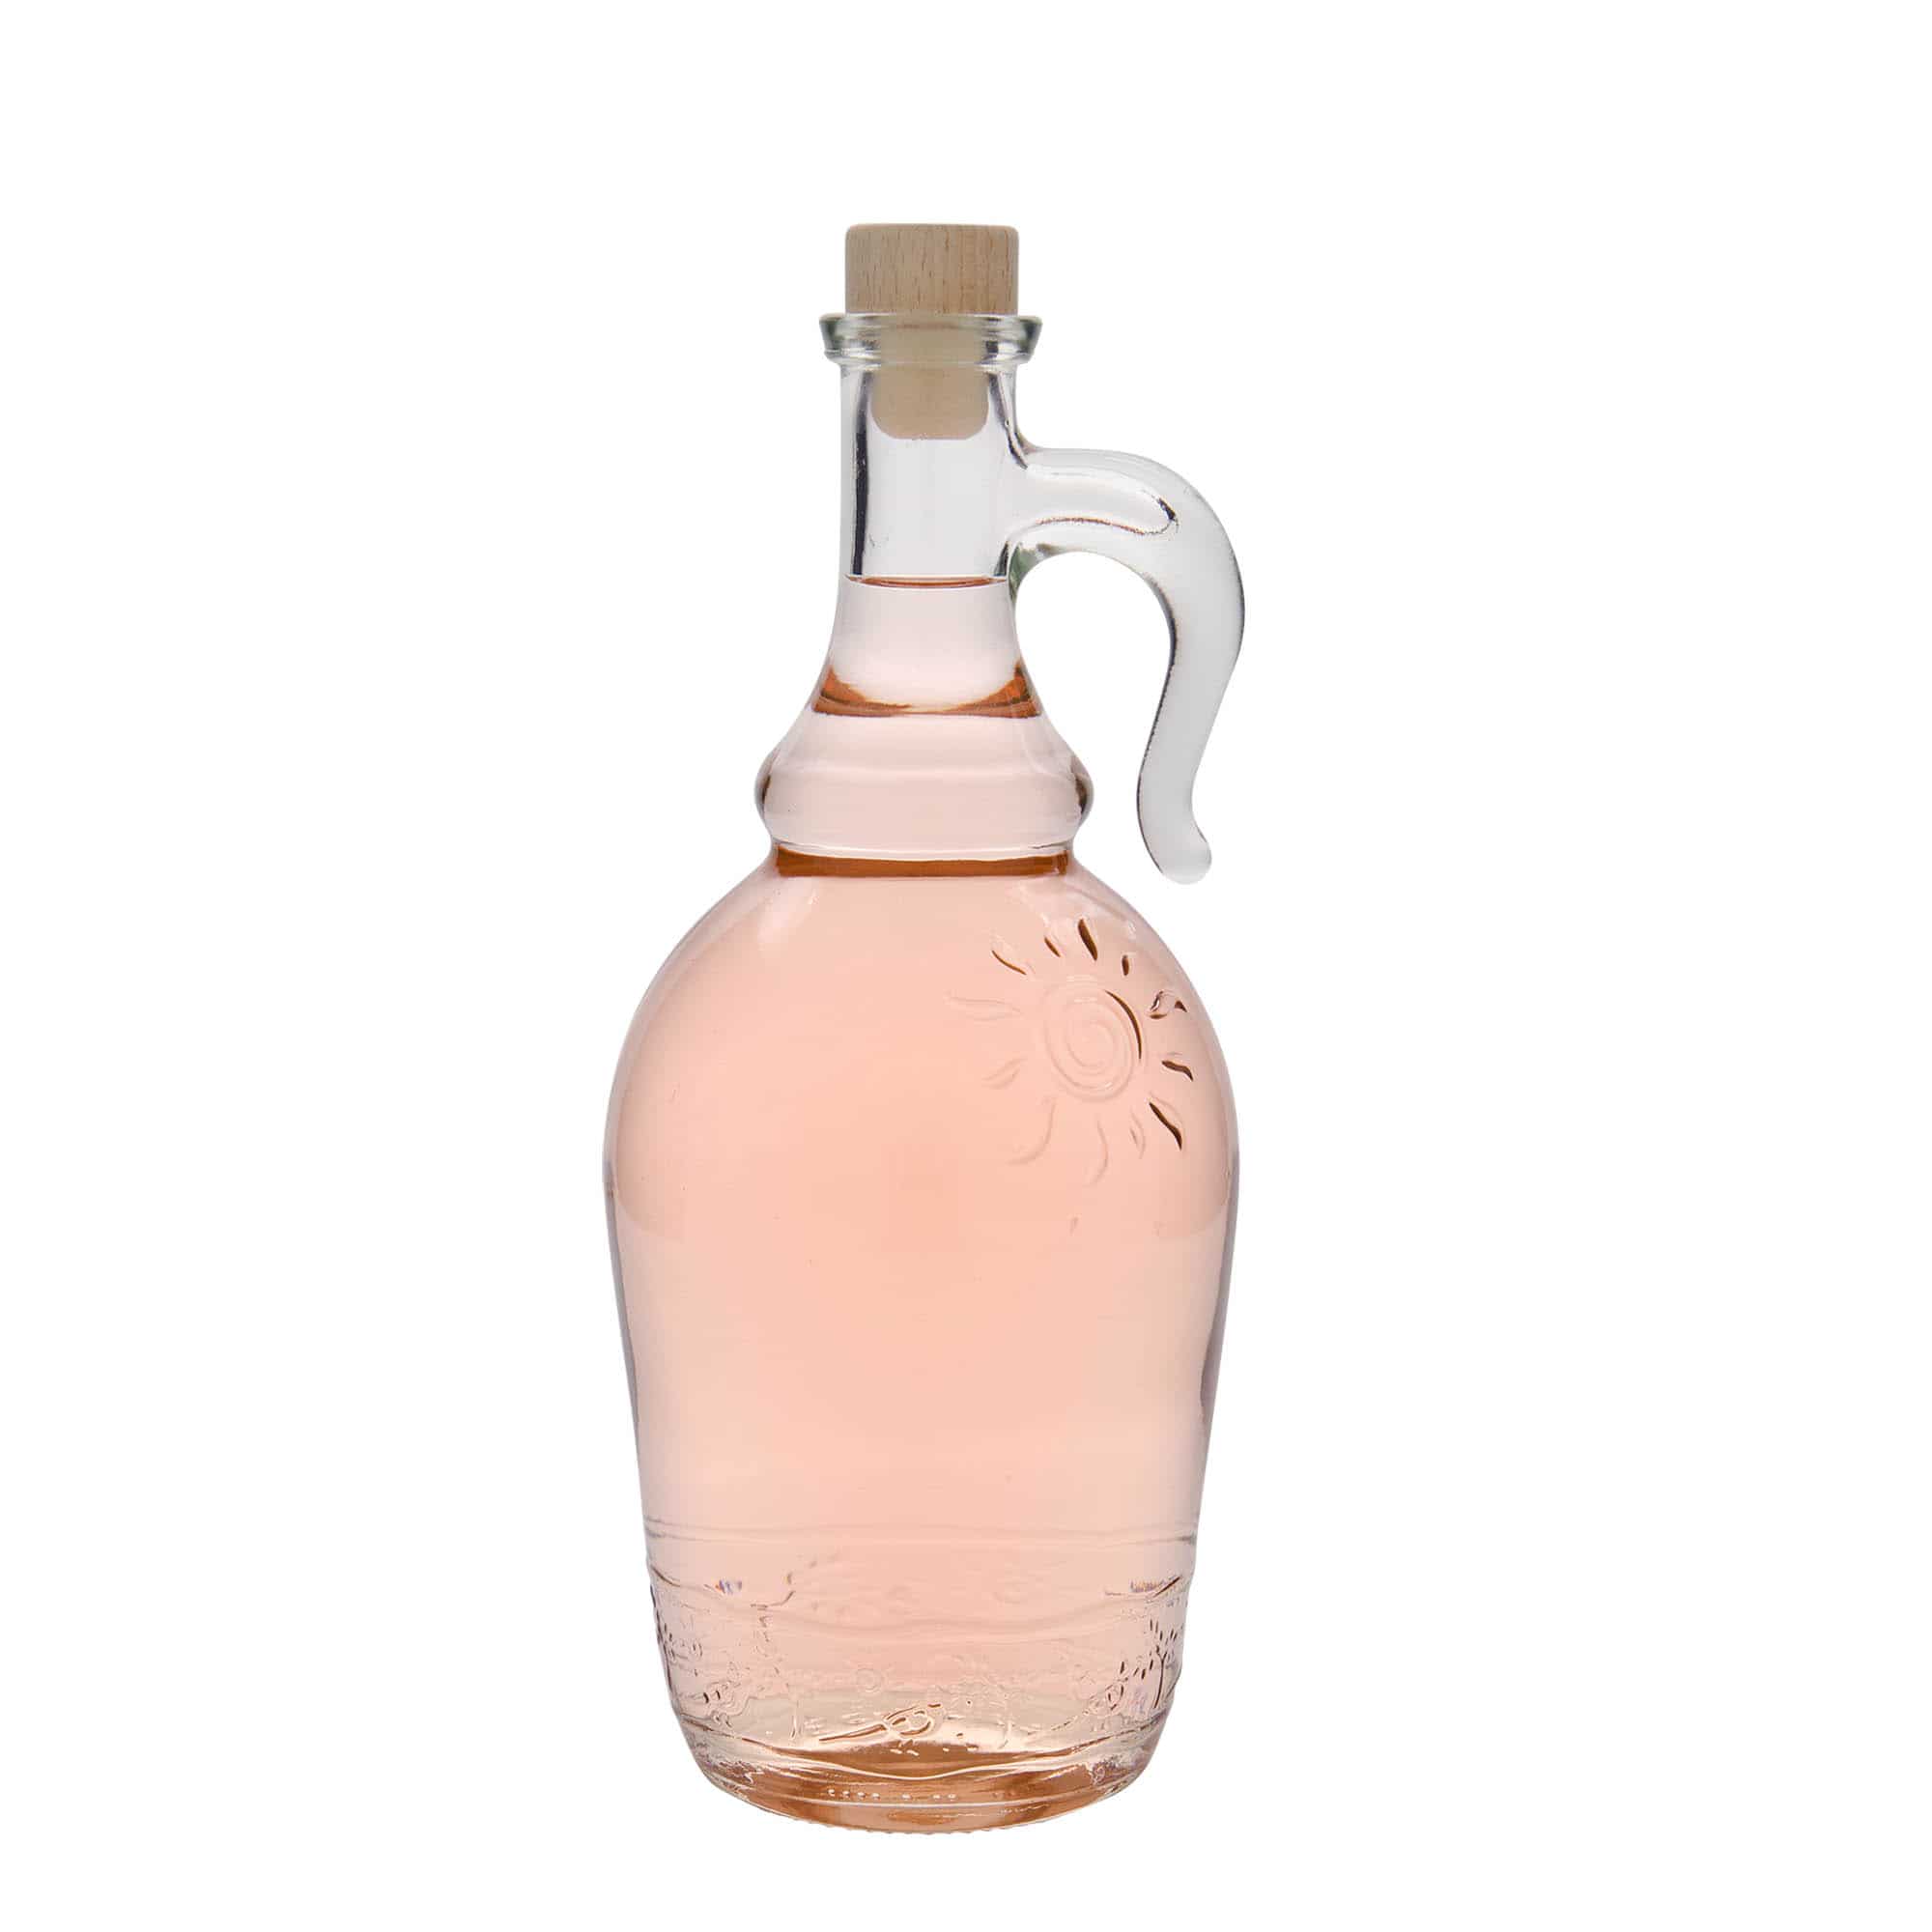 1,000 ml glass bottle 'Sunny', closure: cork